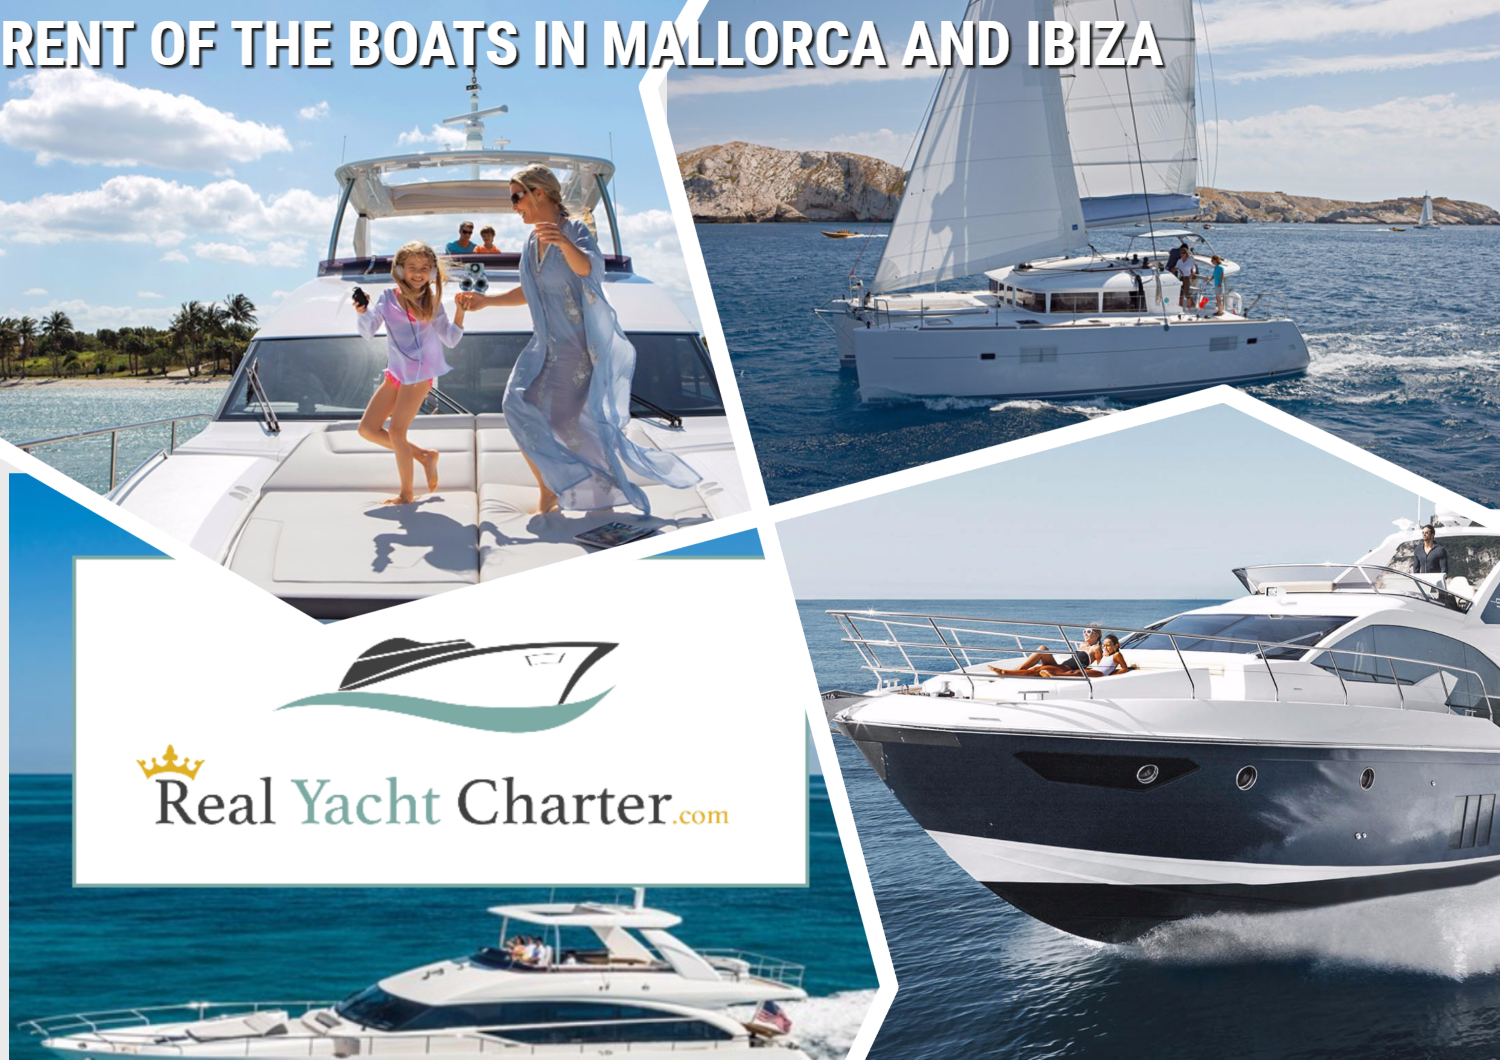 Day Boat Charter in Mallorca